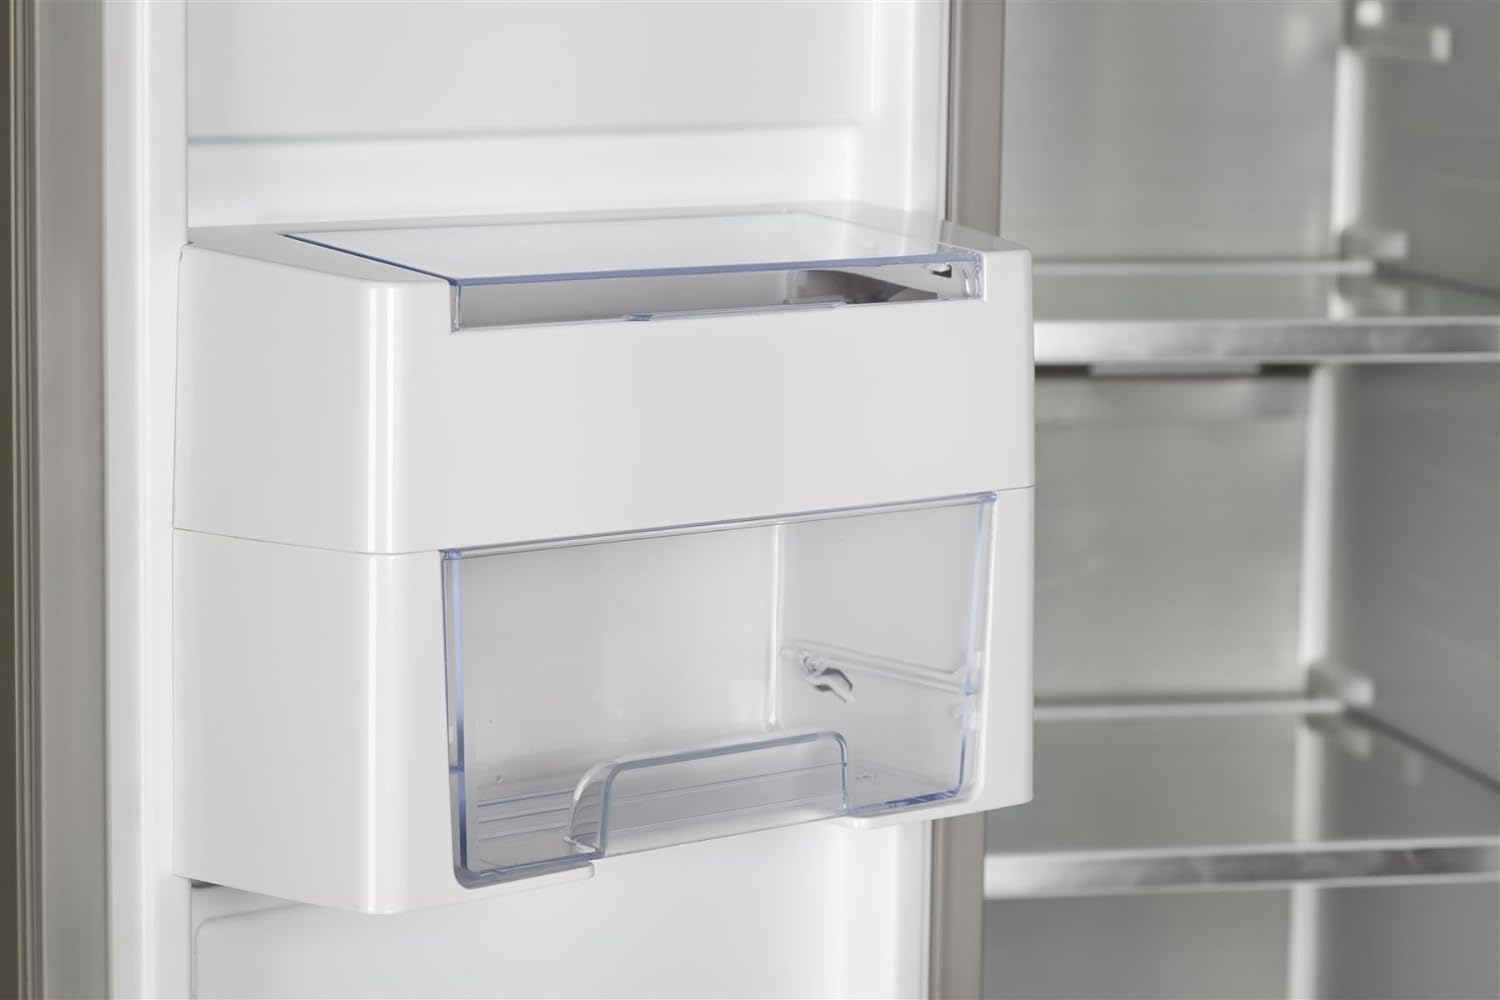 SIA Freestanding 2 Door American Fridge Freezer 627L with Ice & Water Dispenser - Silver - Amazing Gadgets Outlet